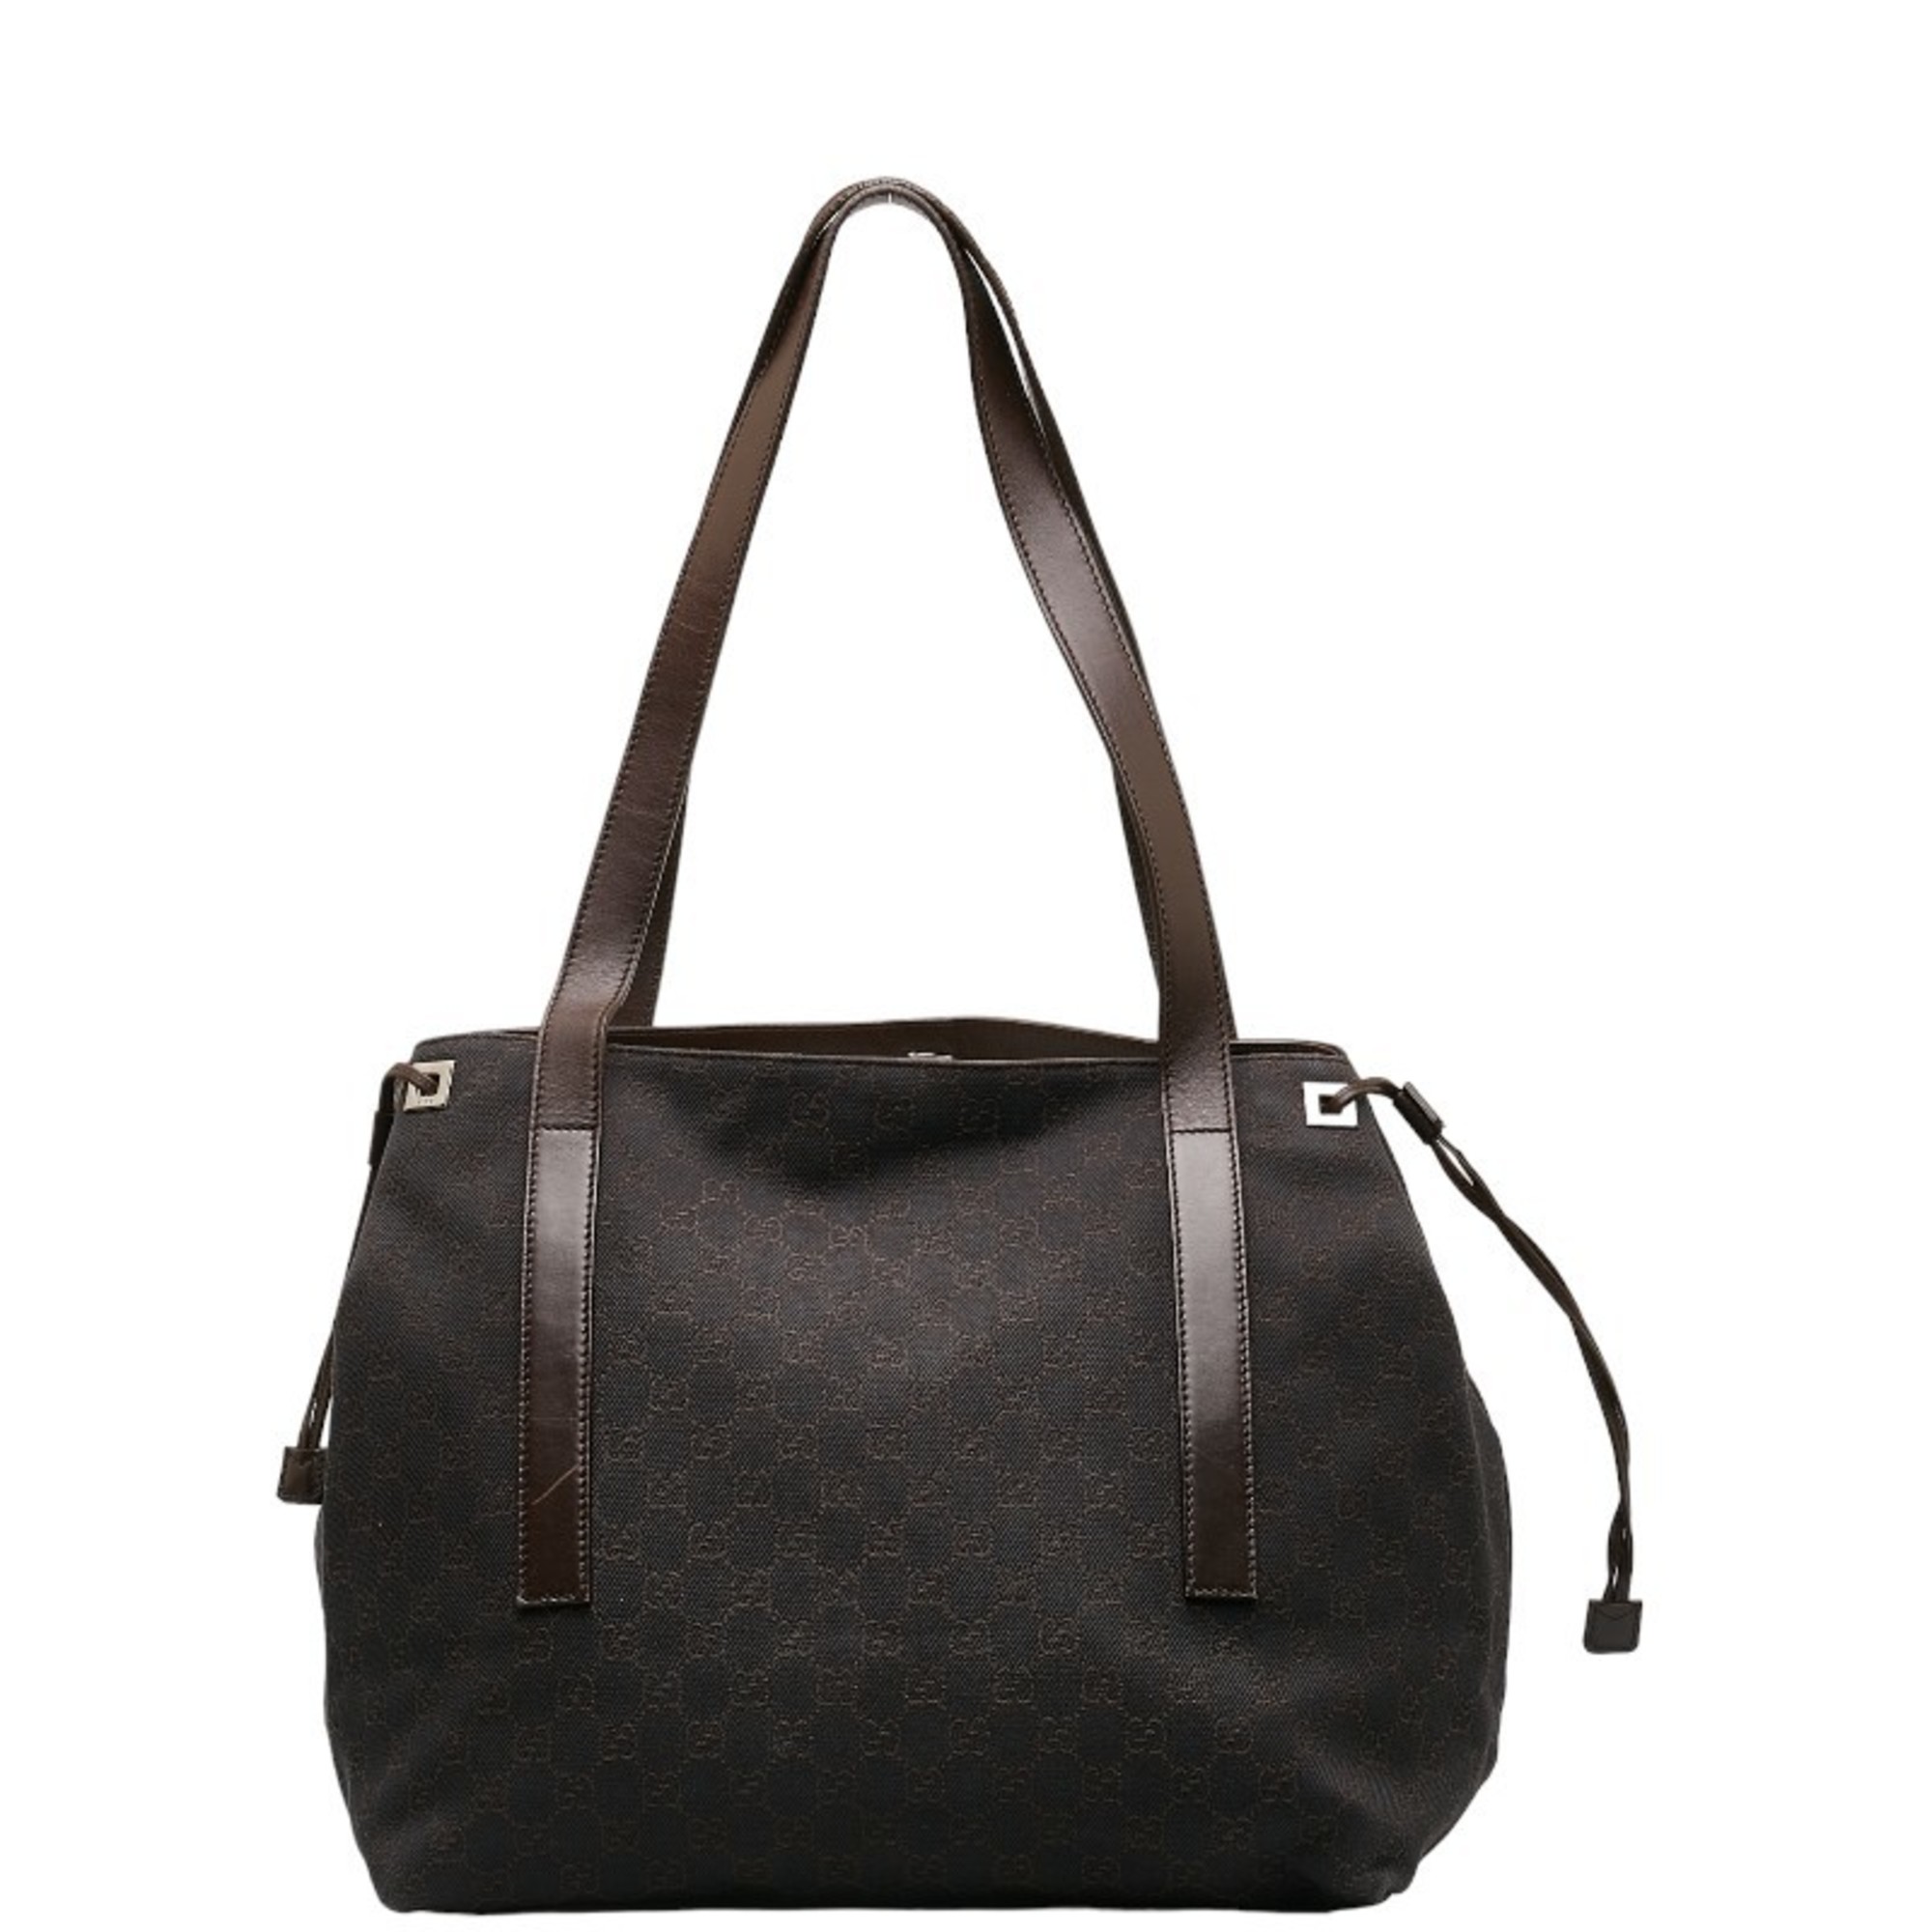 Gucci GG Canvas Tote Bag Shoulder 30501 Black Brown Leather Women's GUCCI